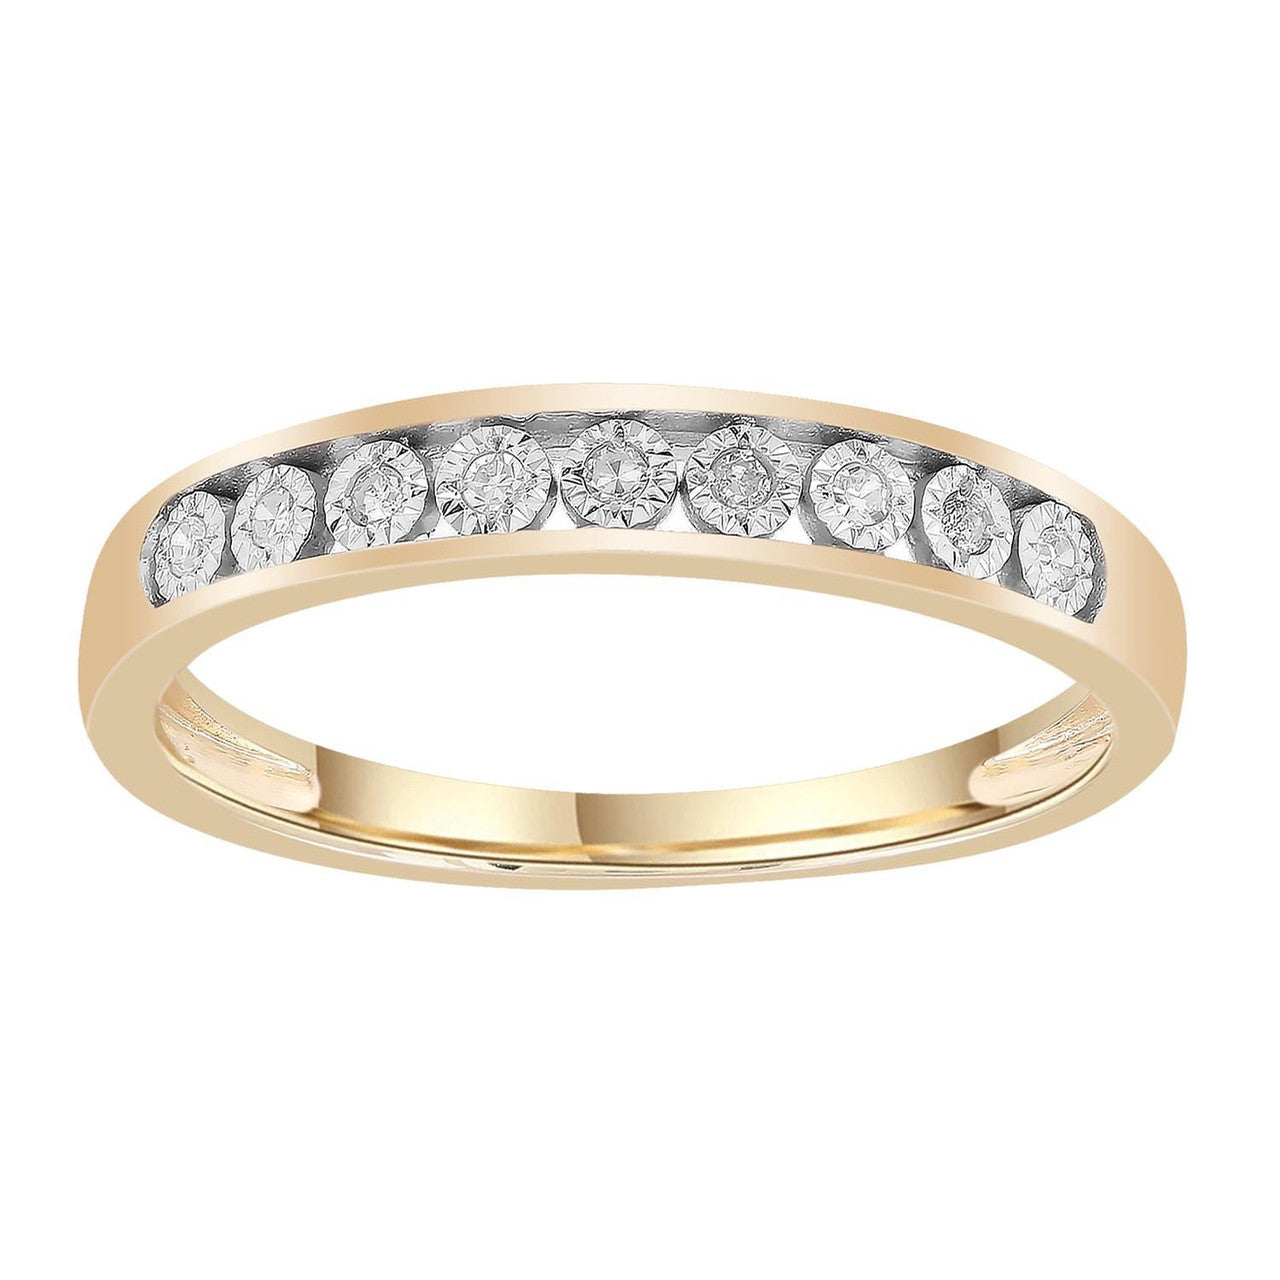 Ice Jewellery Band Ring with 0.05ct Diamonds in 9K Yellow Gold -  IGR-39305-005-Y | Ice Jewellery Australia